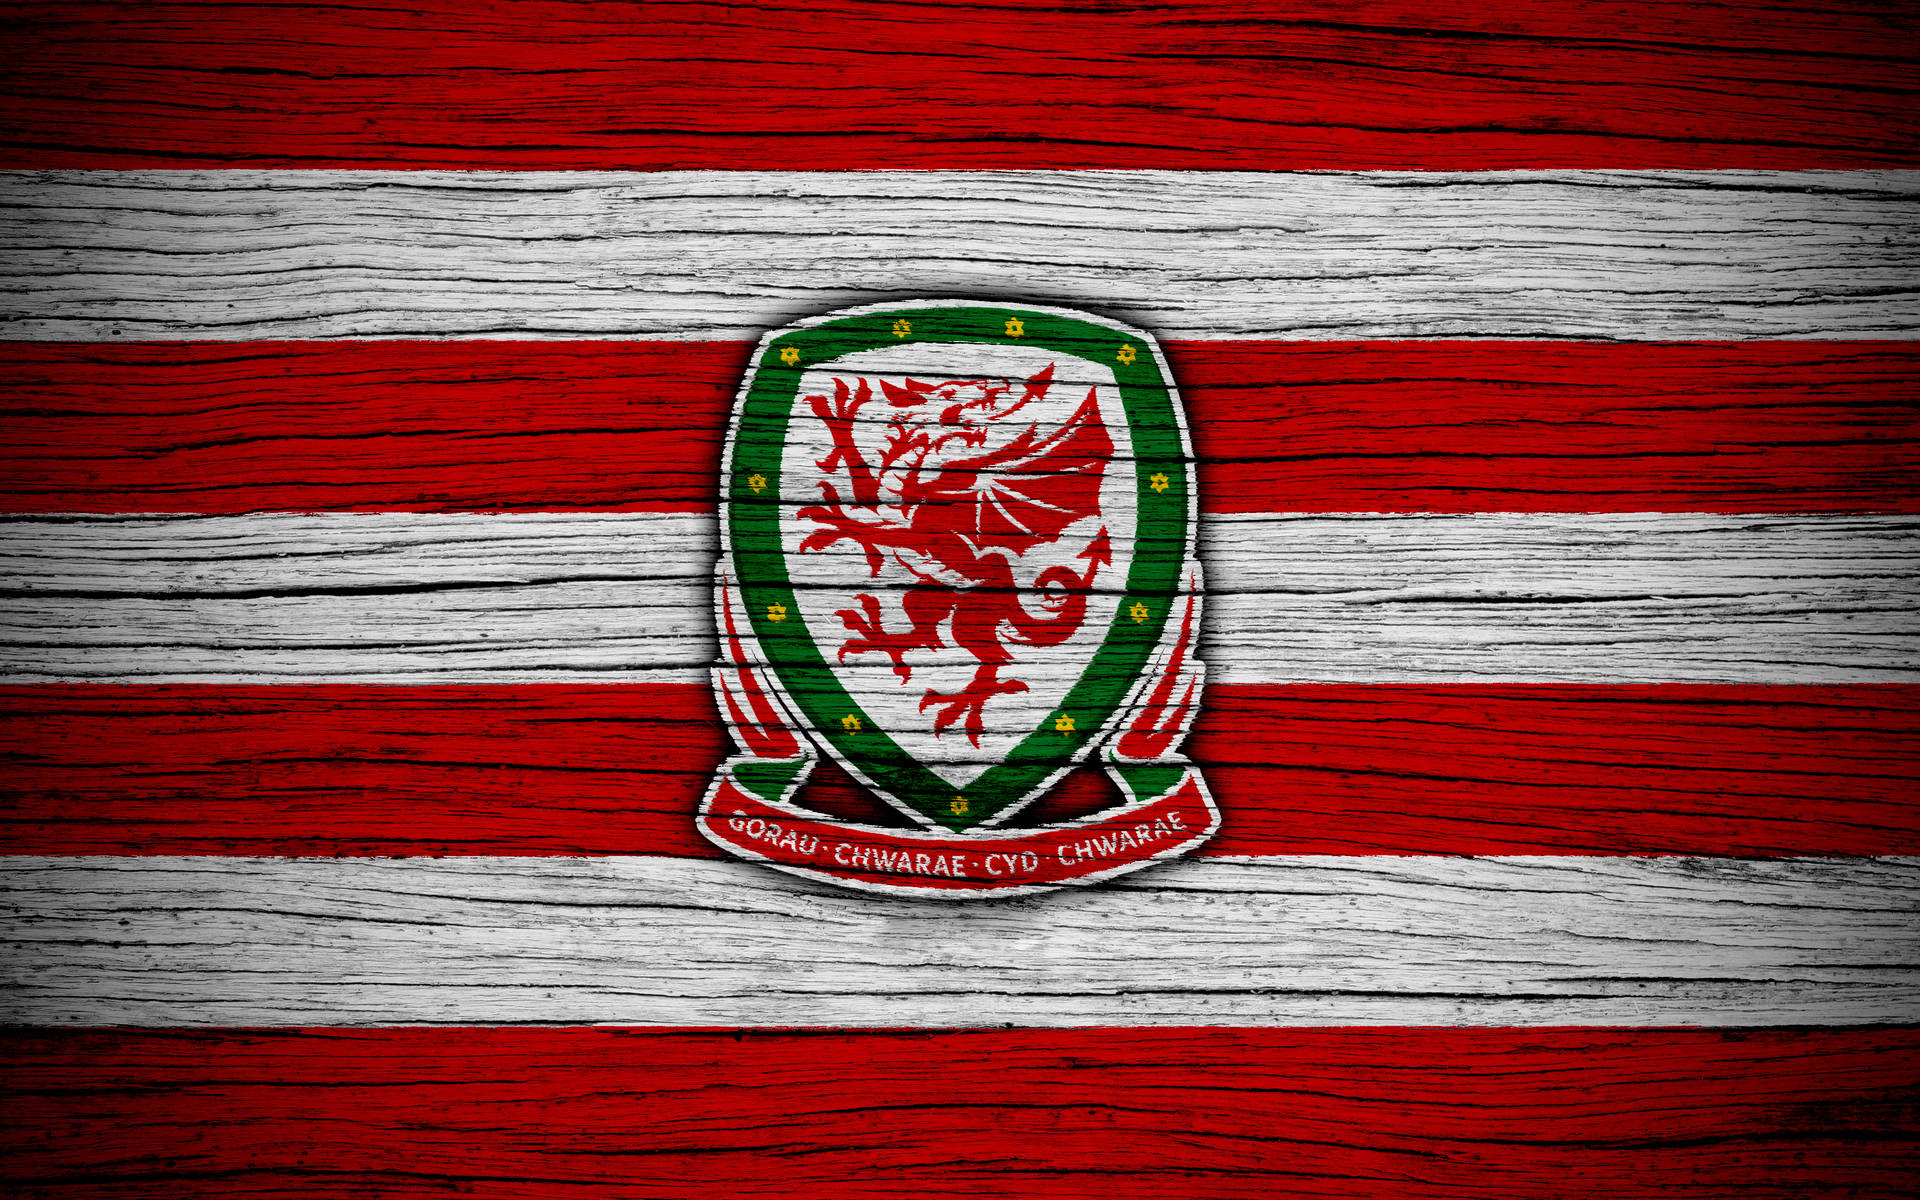 Wales National Football Team Painted On Wood